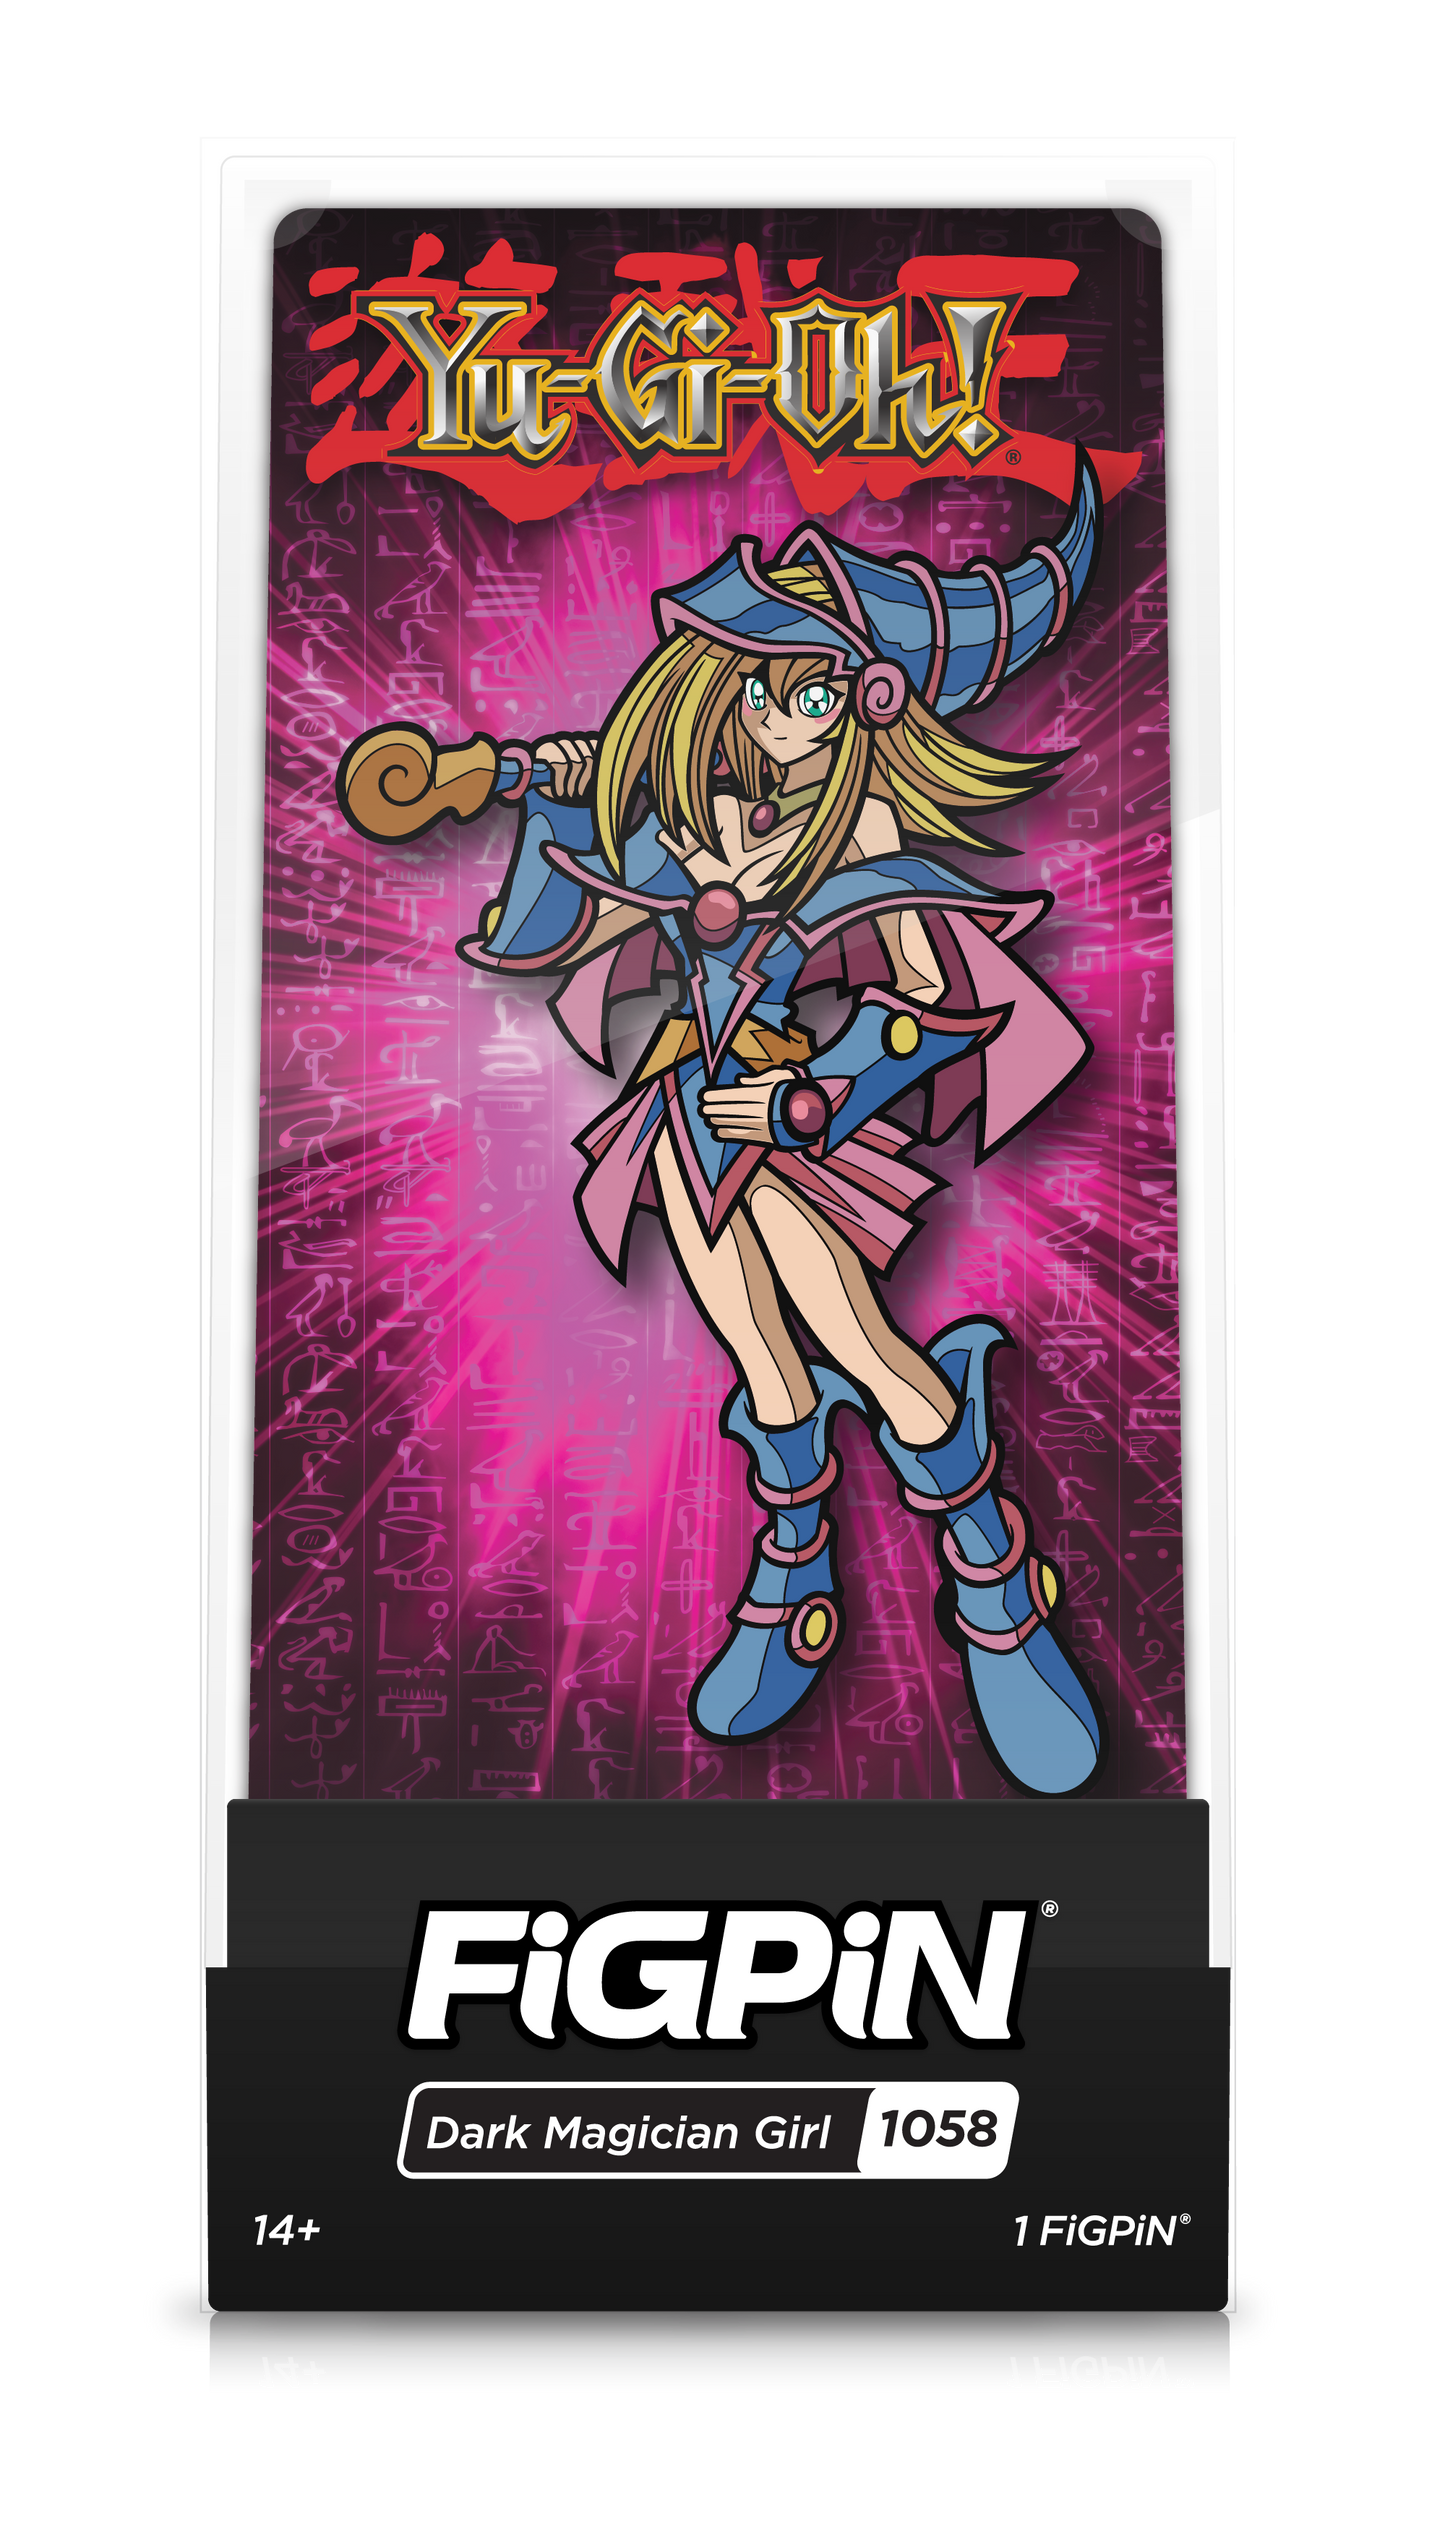 Dark Magician Girl #1058 - Yu-Gi-Oh - FiGPiN